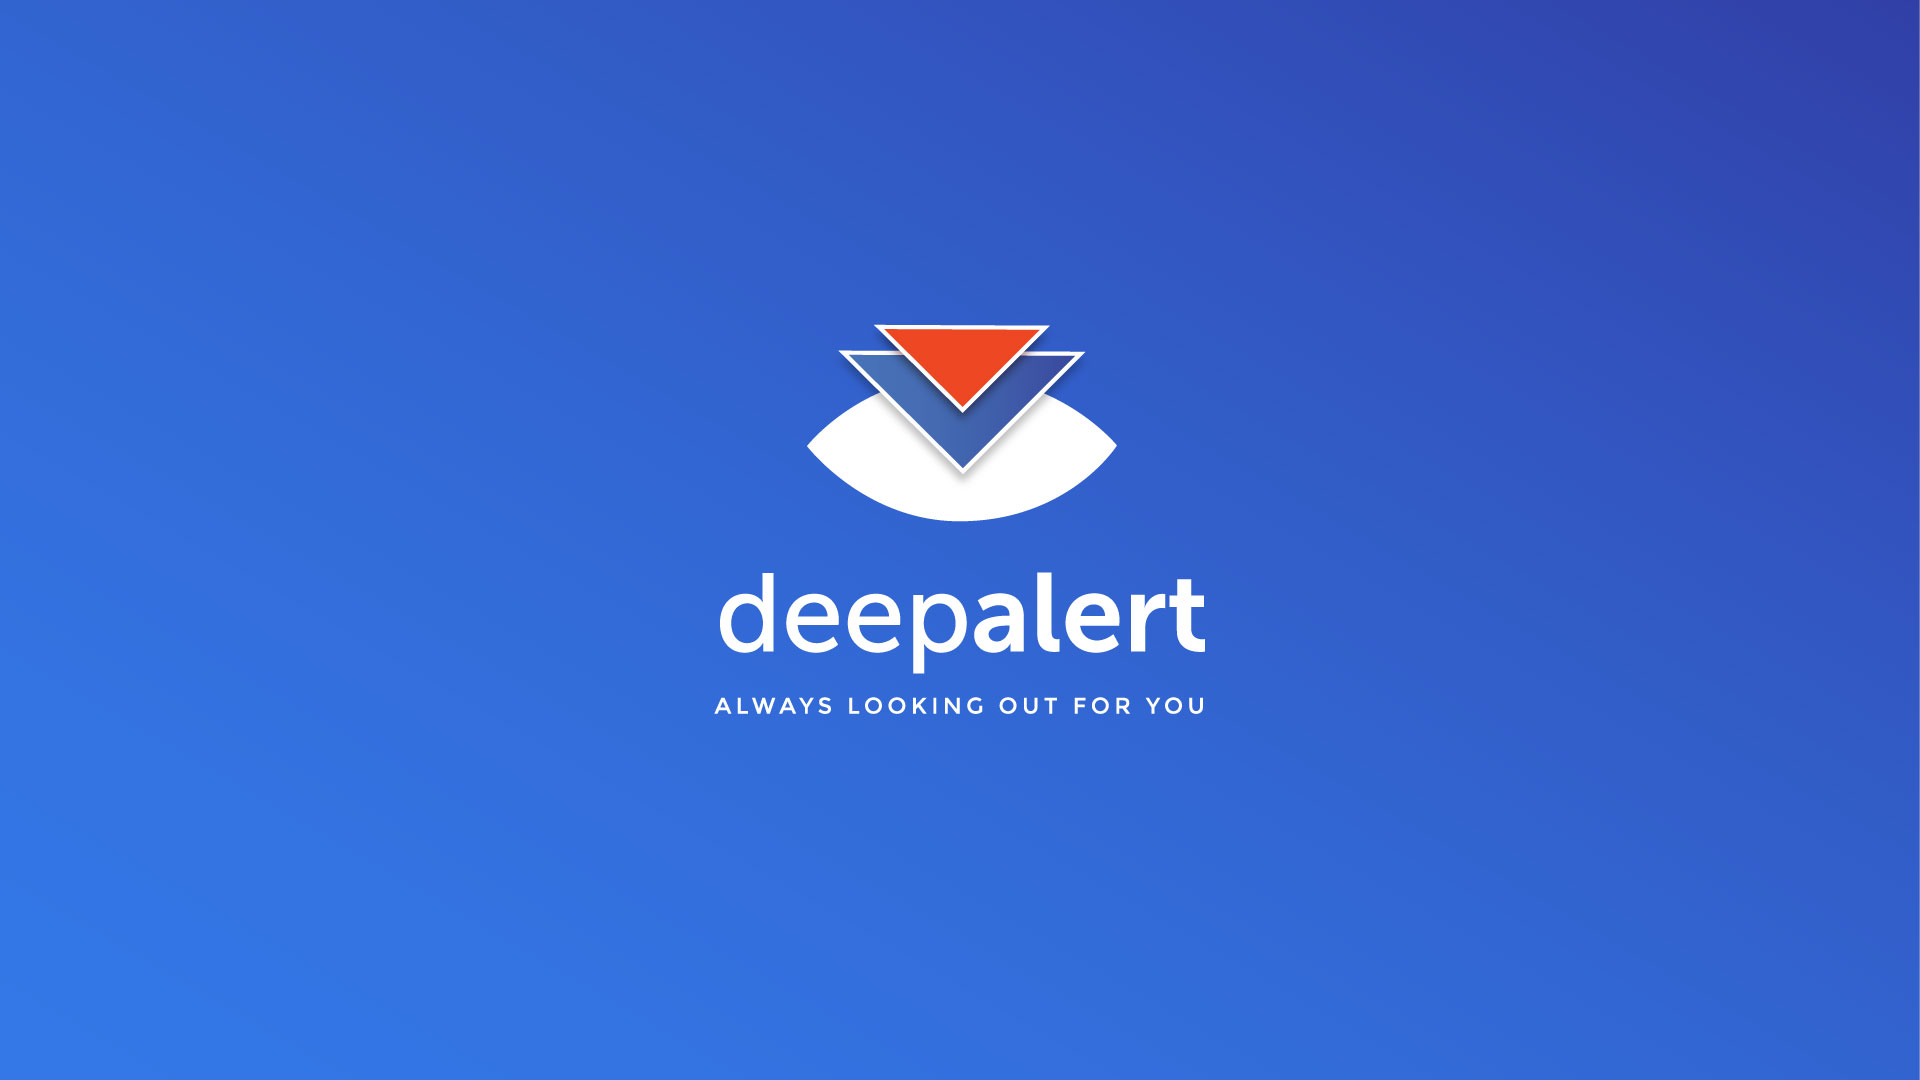 Introducing DeepAlert EdgePlus - Security Surveillance at its finest.